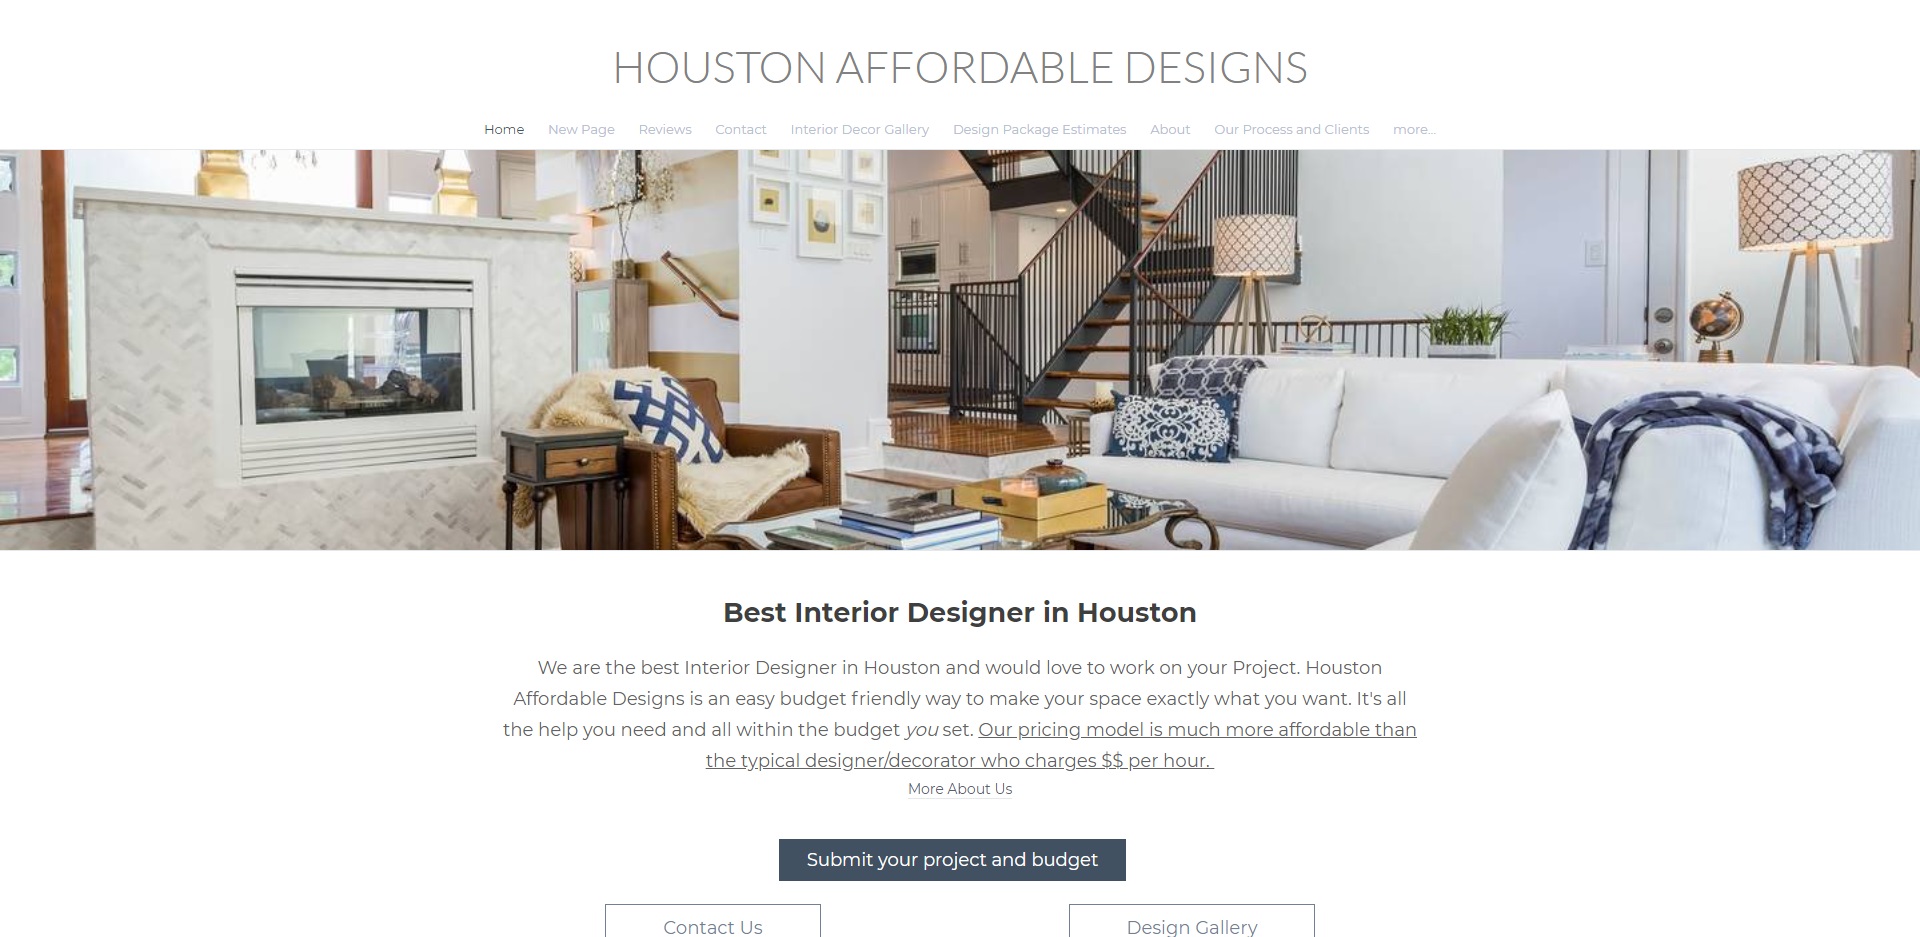 Best Interior Designers in Houston